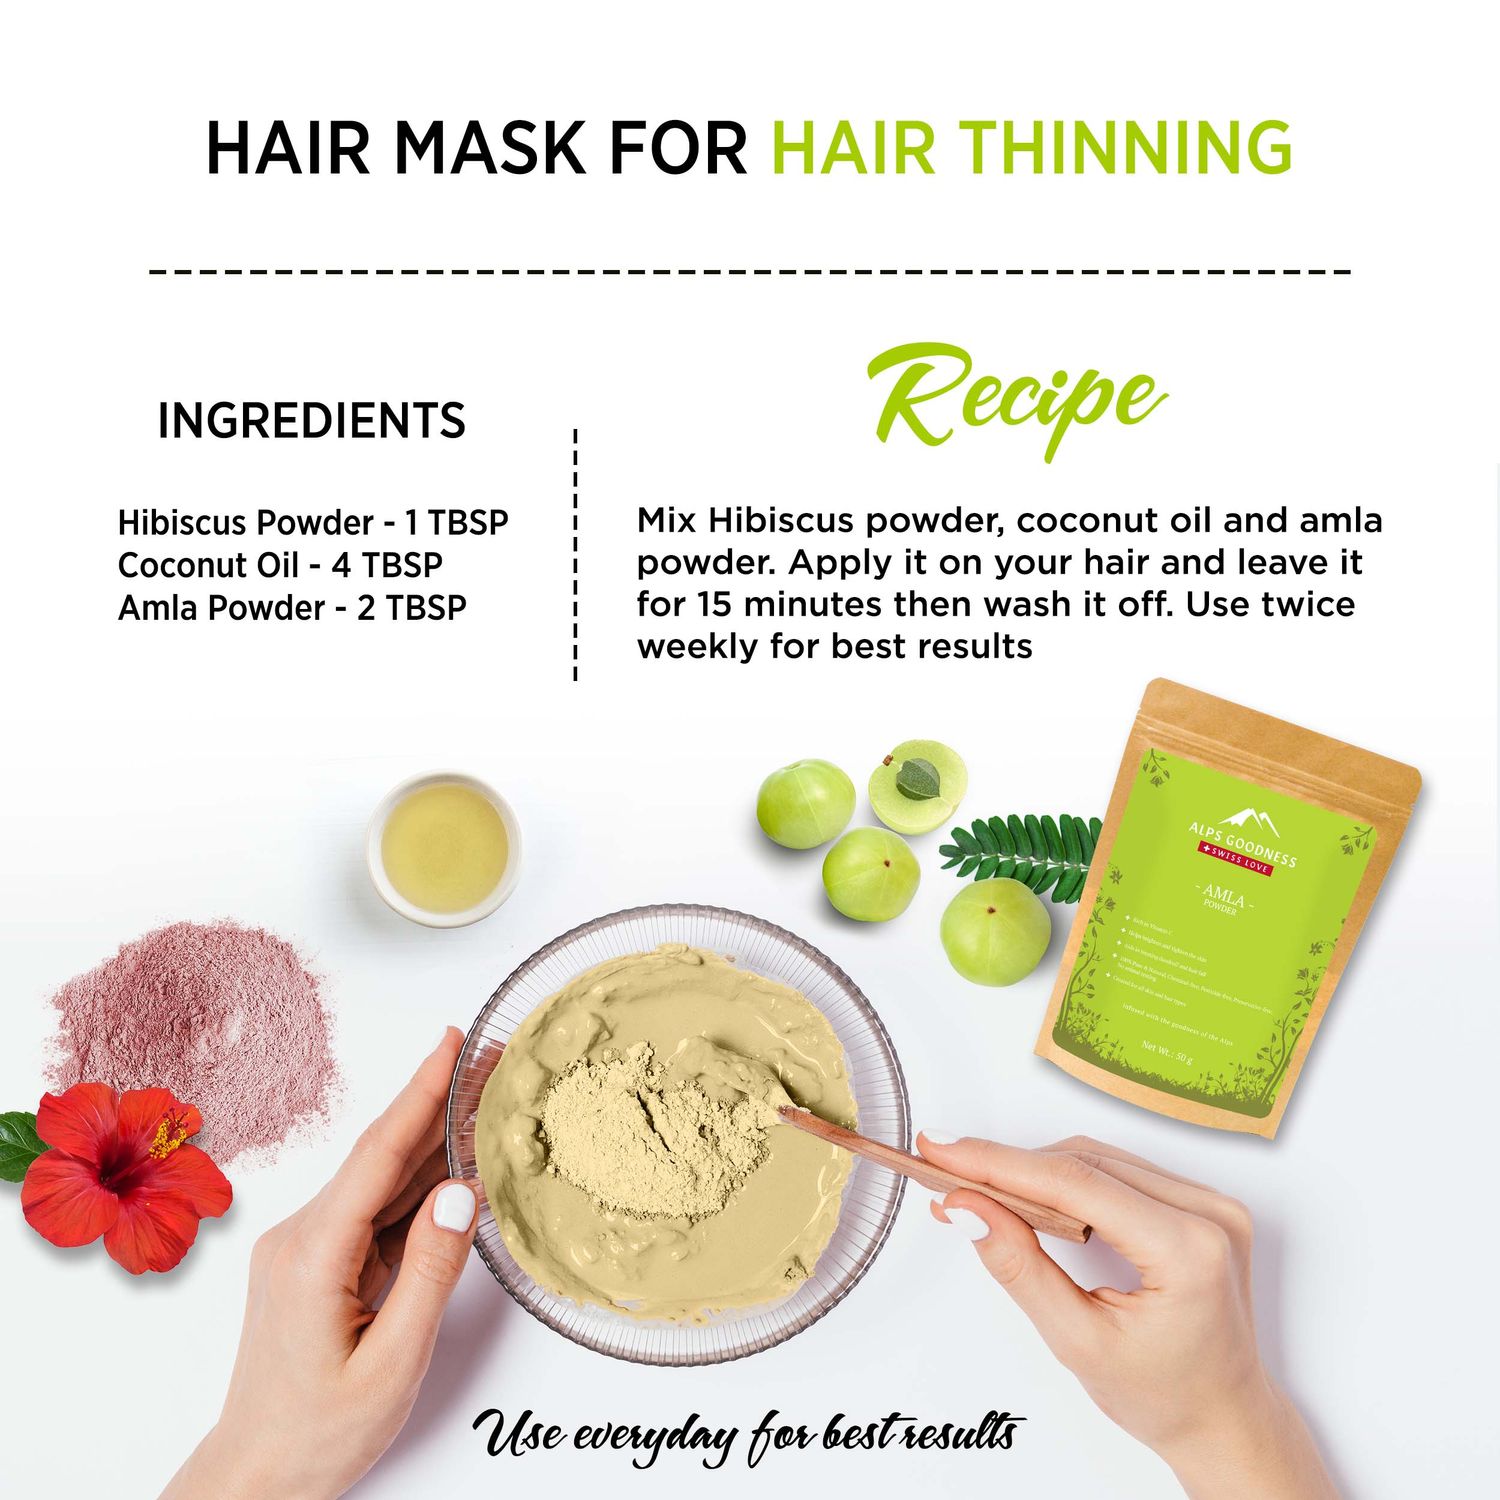 Amla Powder for Hair - Benefits and DIY Hair Growth Mask – The Henna Guys